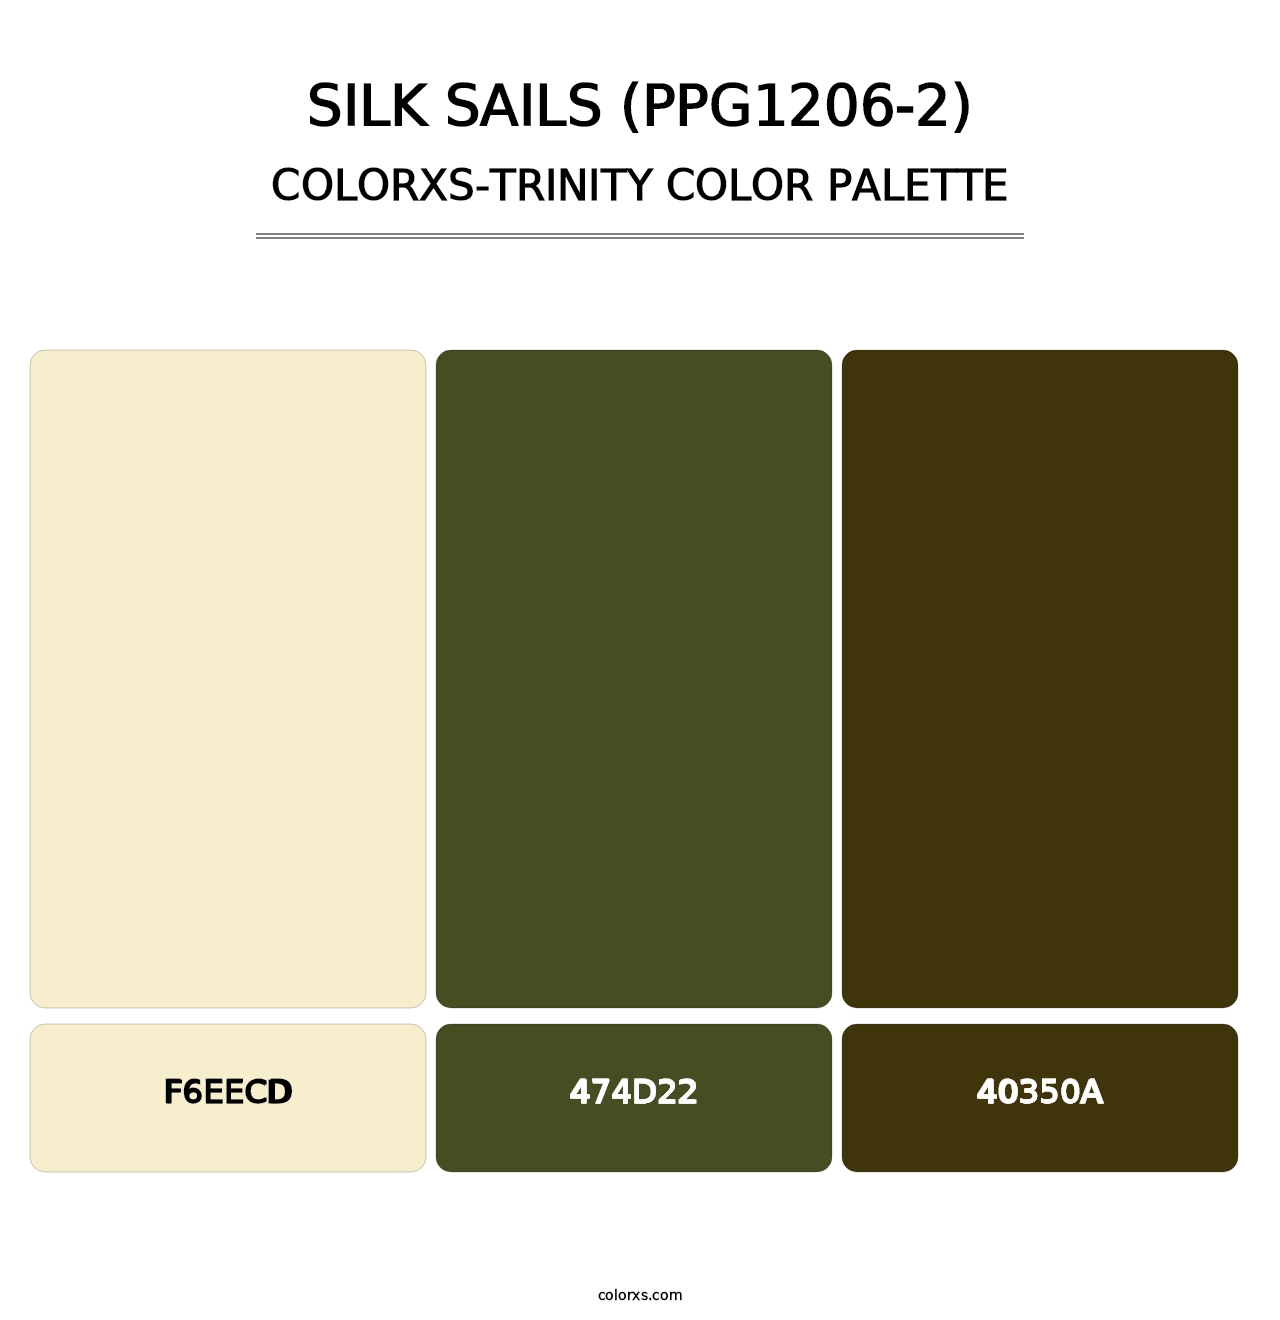 Silk Sails (PPG1206-2) - Colorxs Trinity Palette